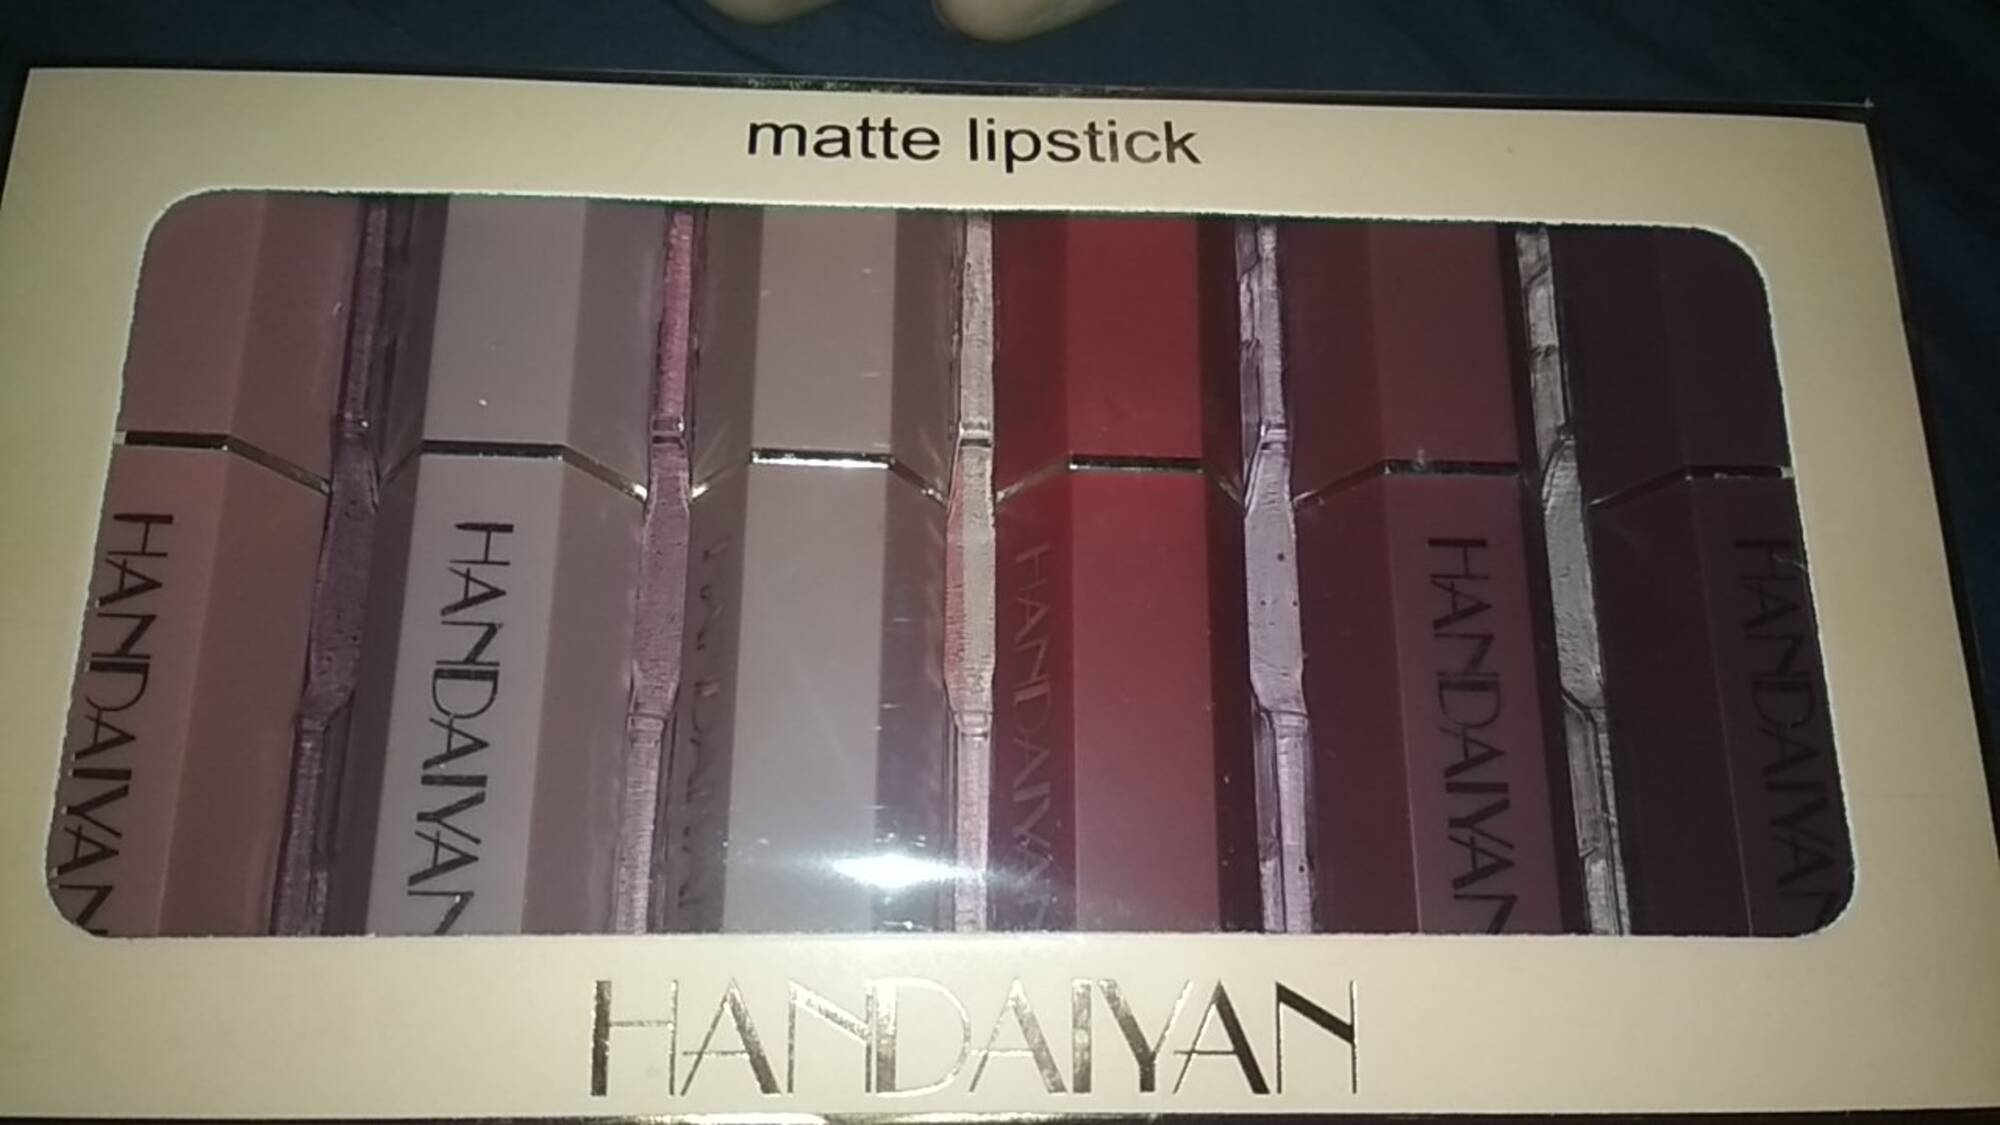 HANDAIYAN - Matte lipstick